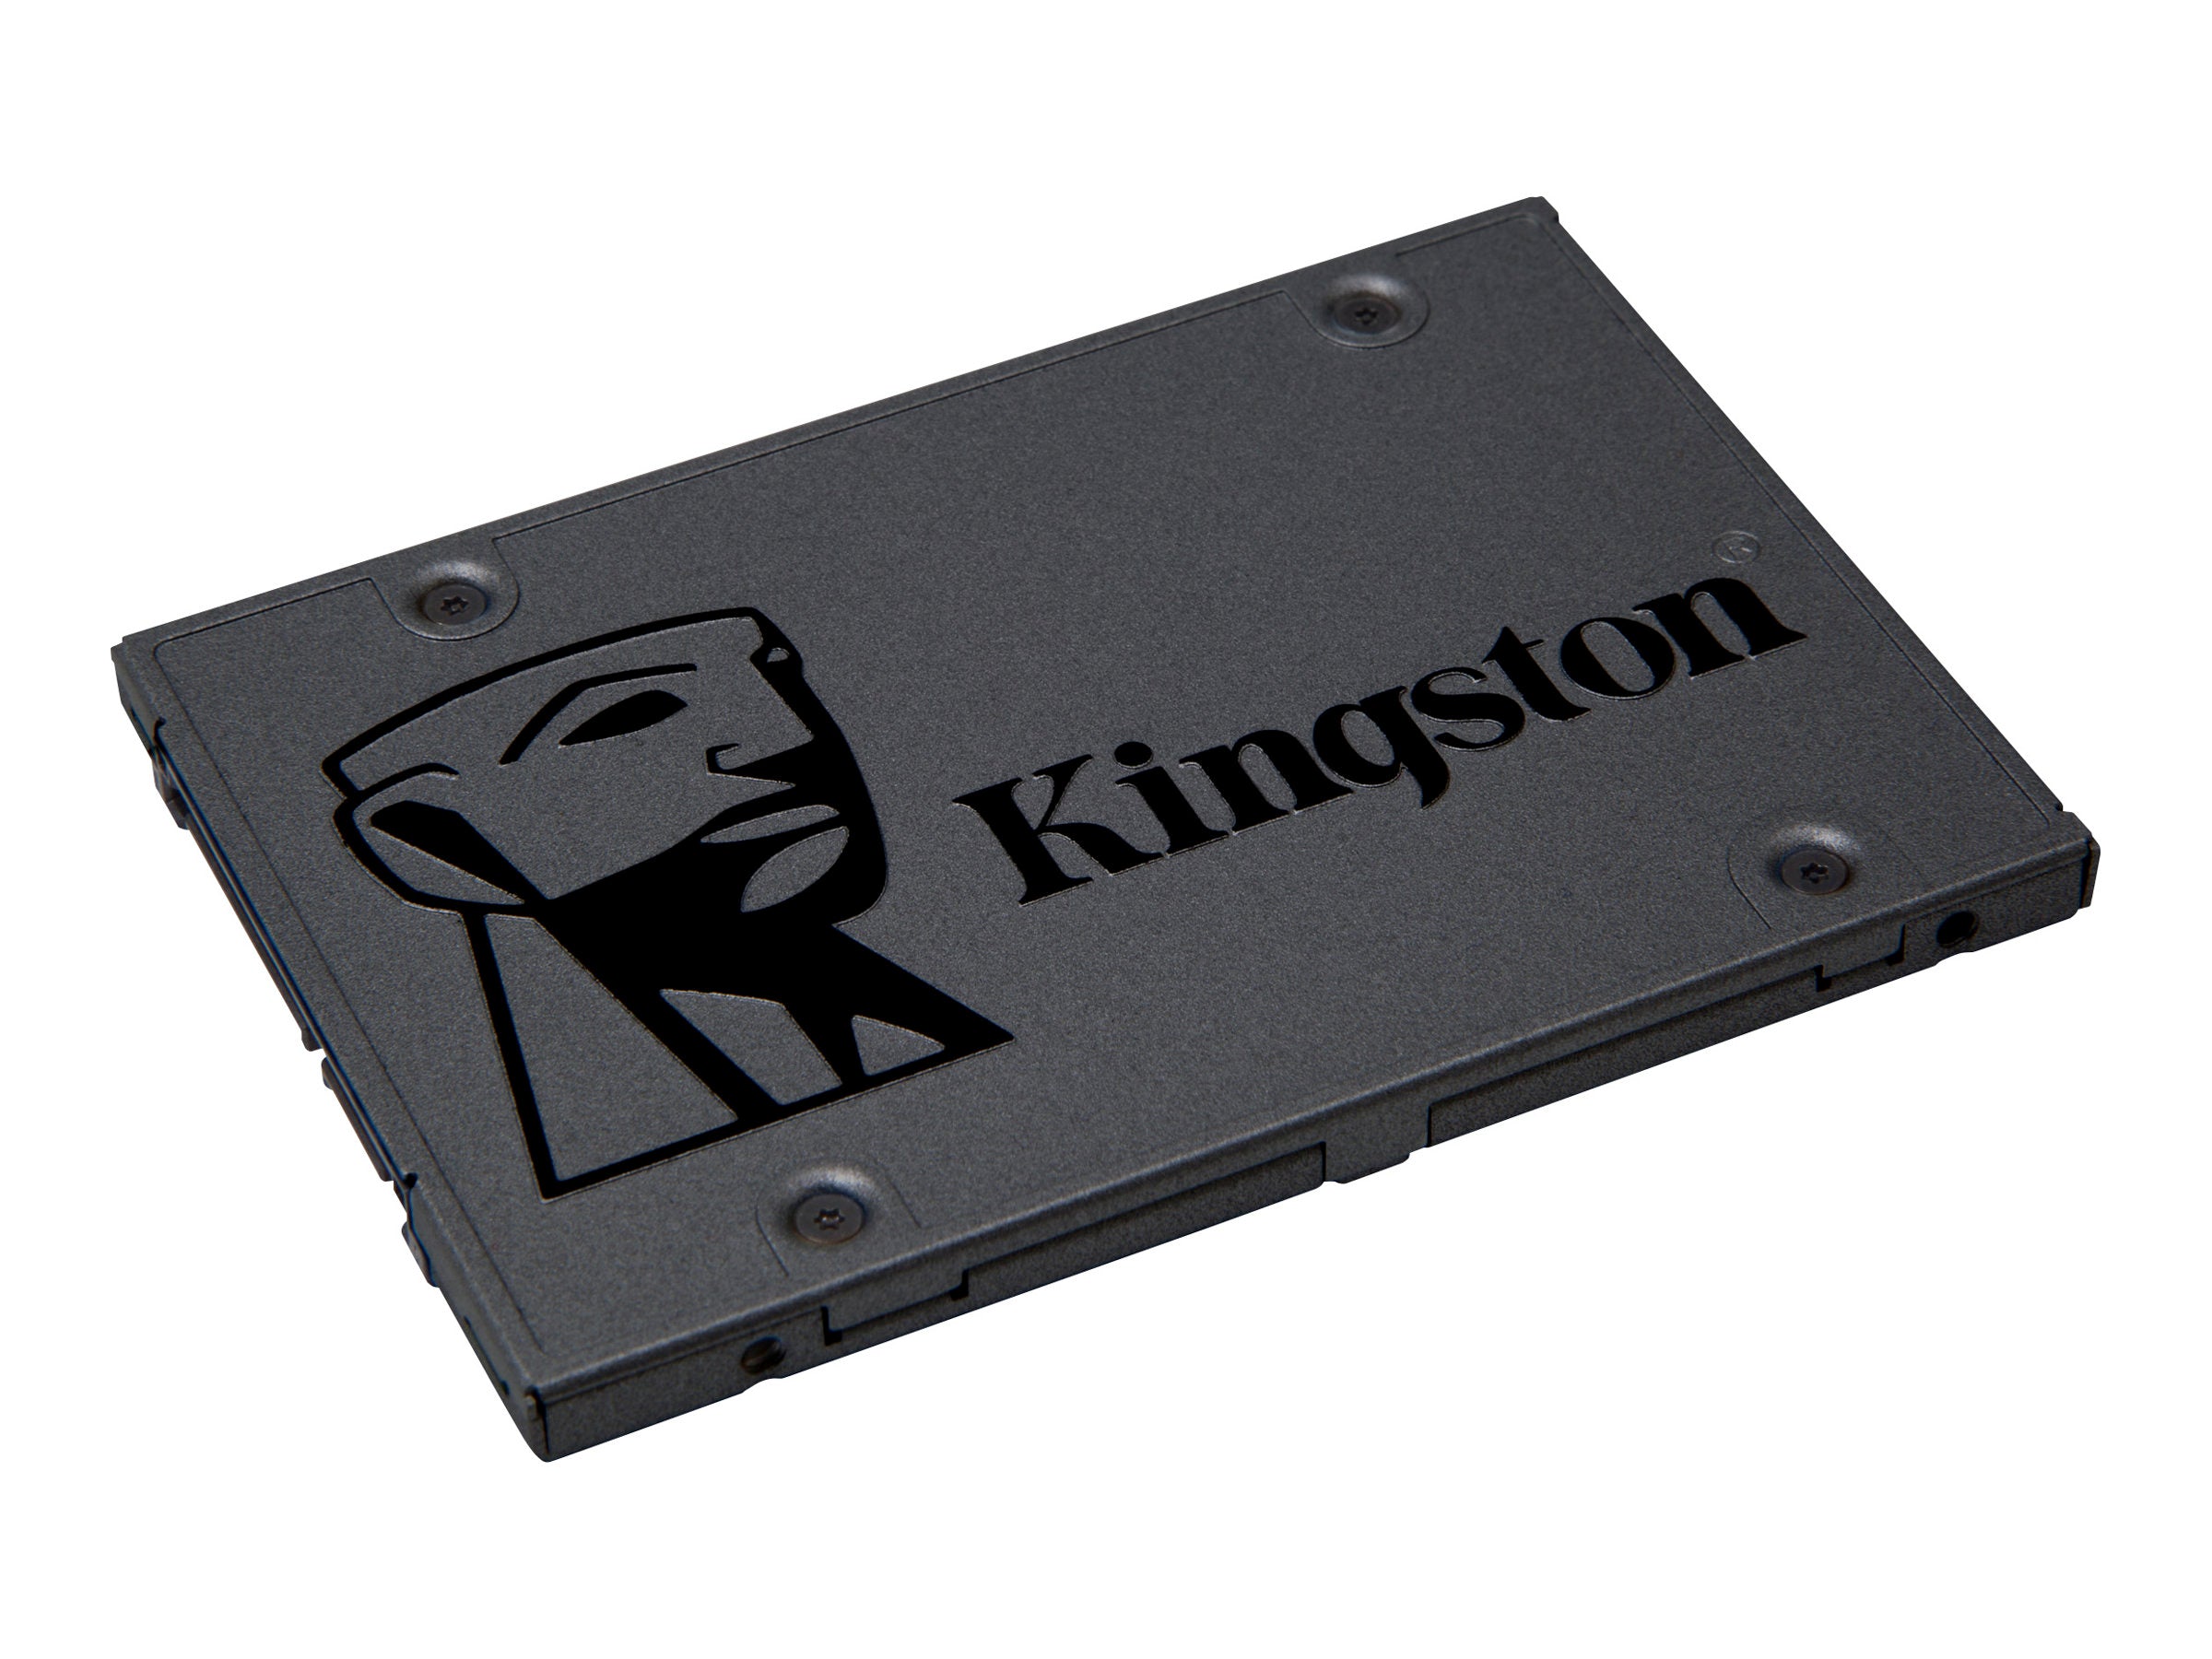 Harddisk Kingston SSD A400 2.5" SATA-600 - Lootbox.dk